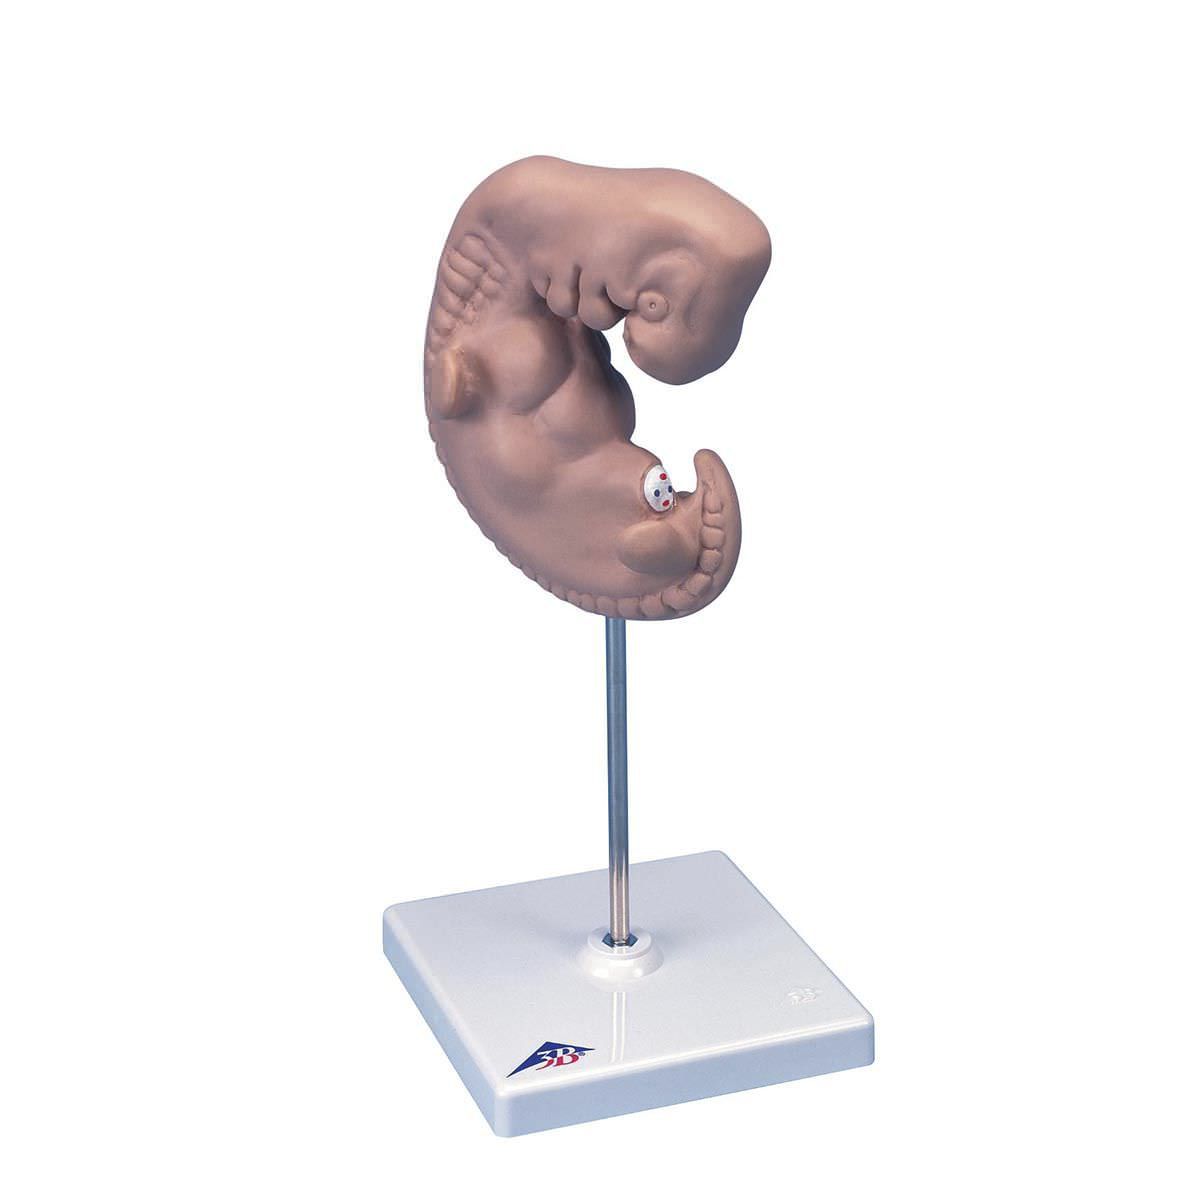 Embryo anatomical model L15 3B Scientific